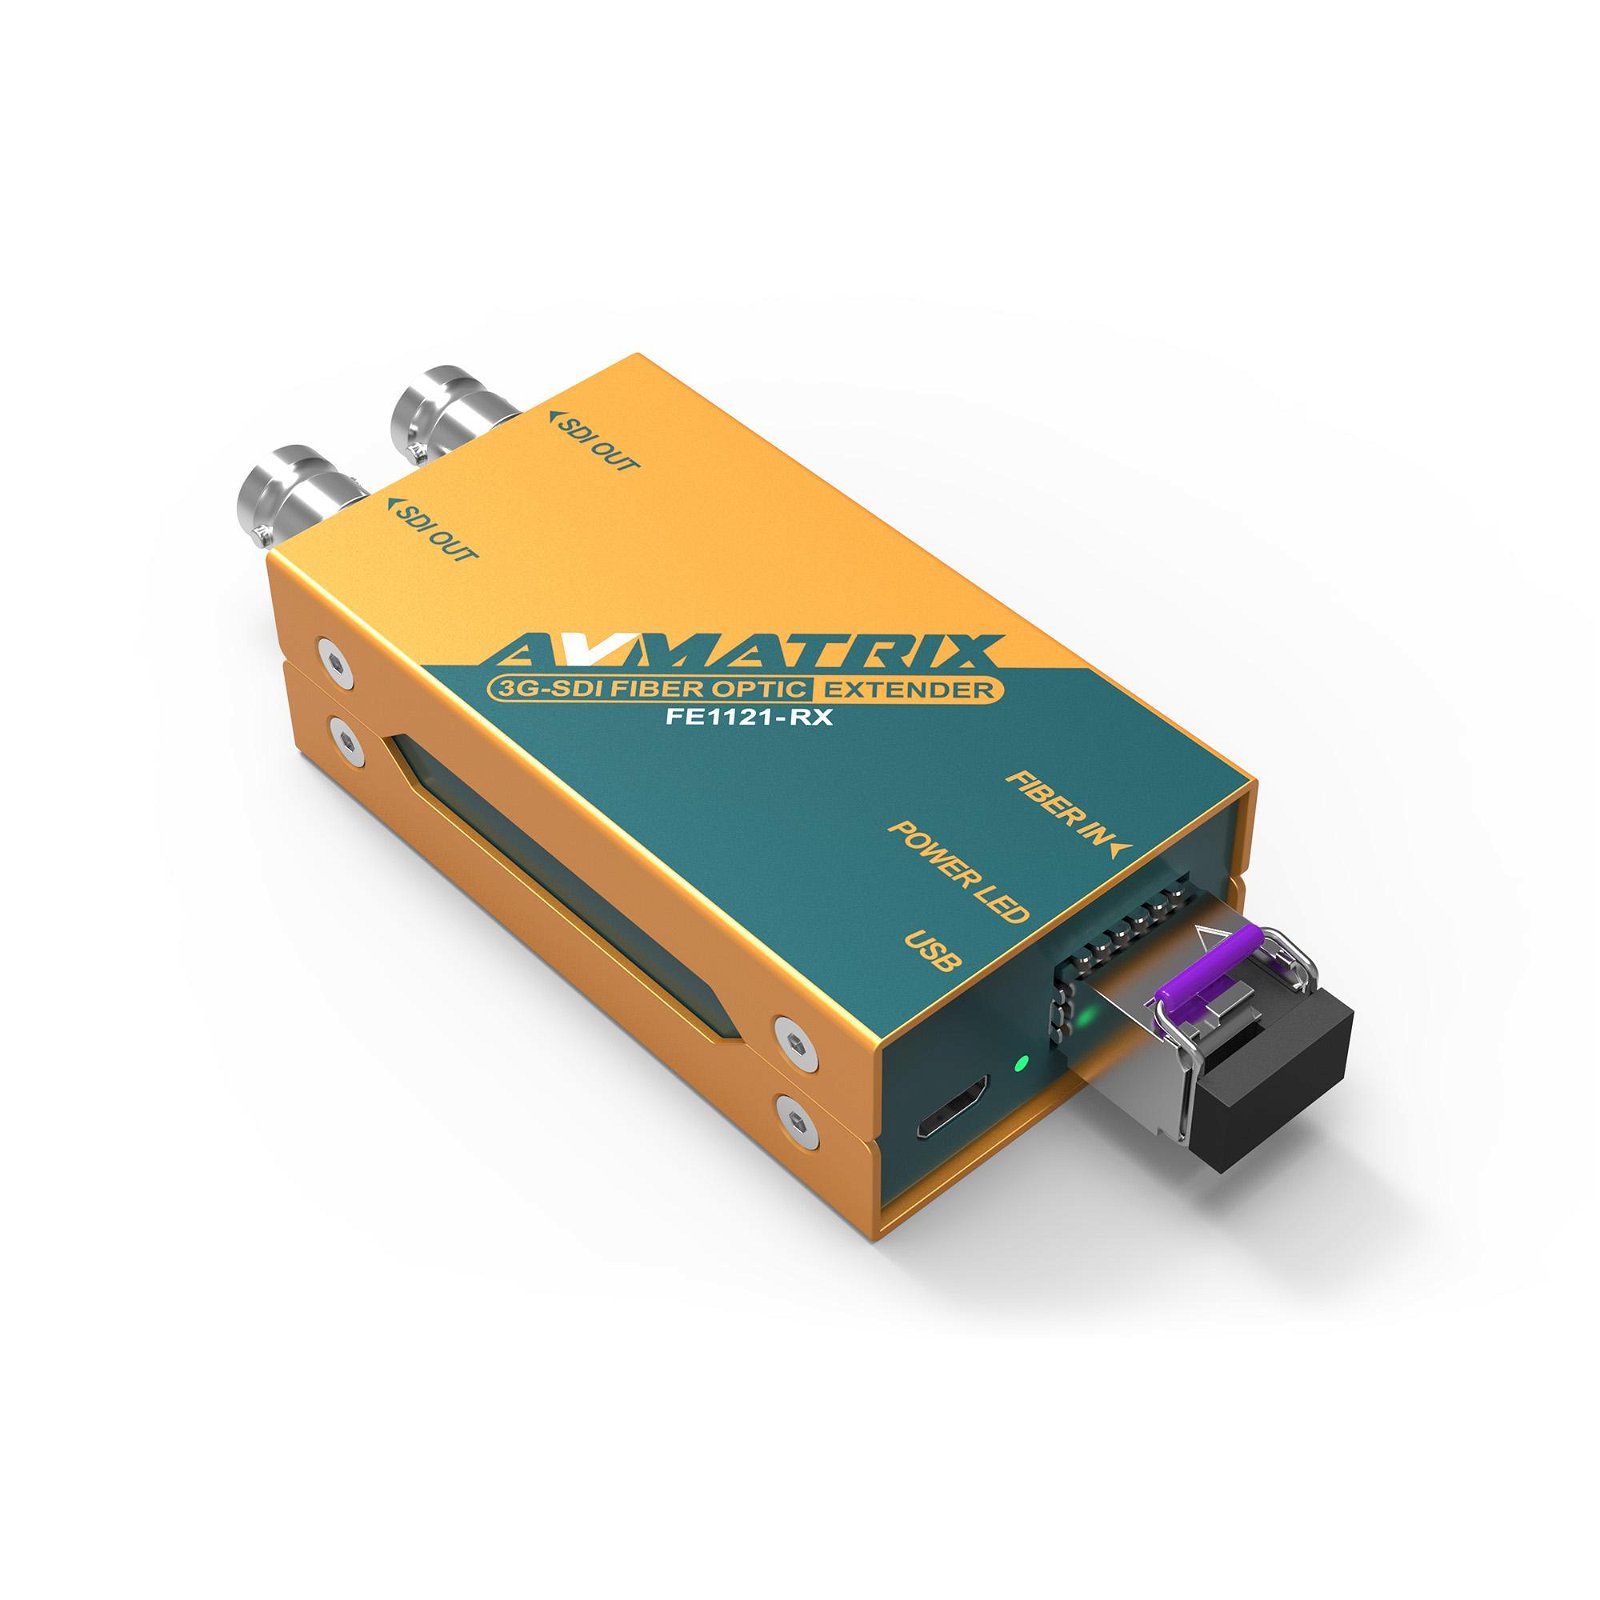 AVMATRIX 3G-SDI FIBER OPTIC EXTENDER 5